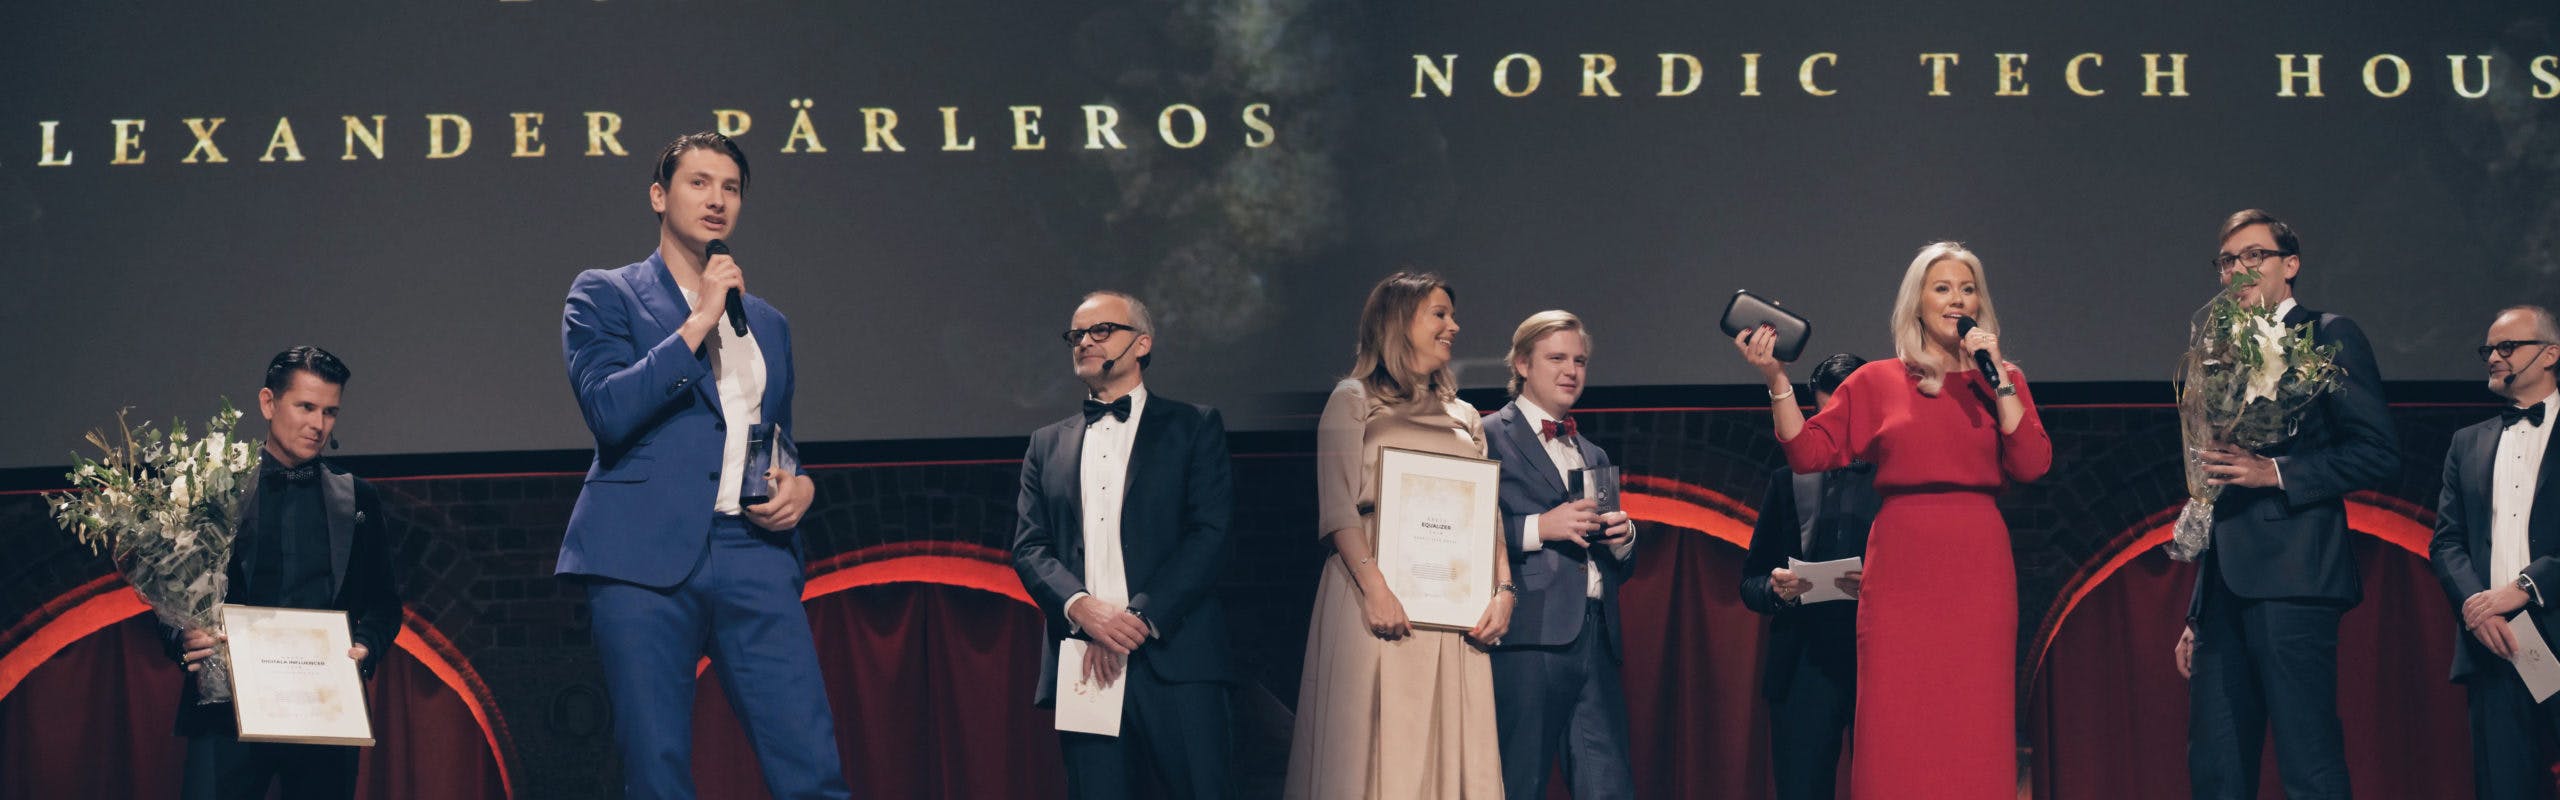 Considgala 2018 isabella Löwengrip och Alexander Pärleros prisas